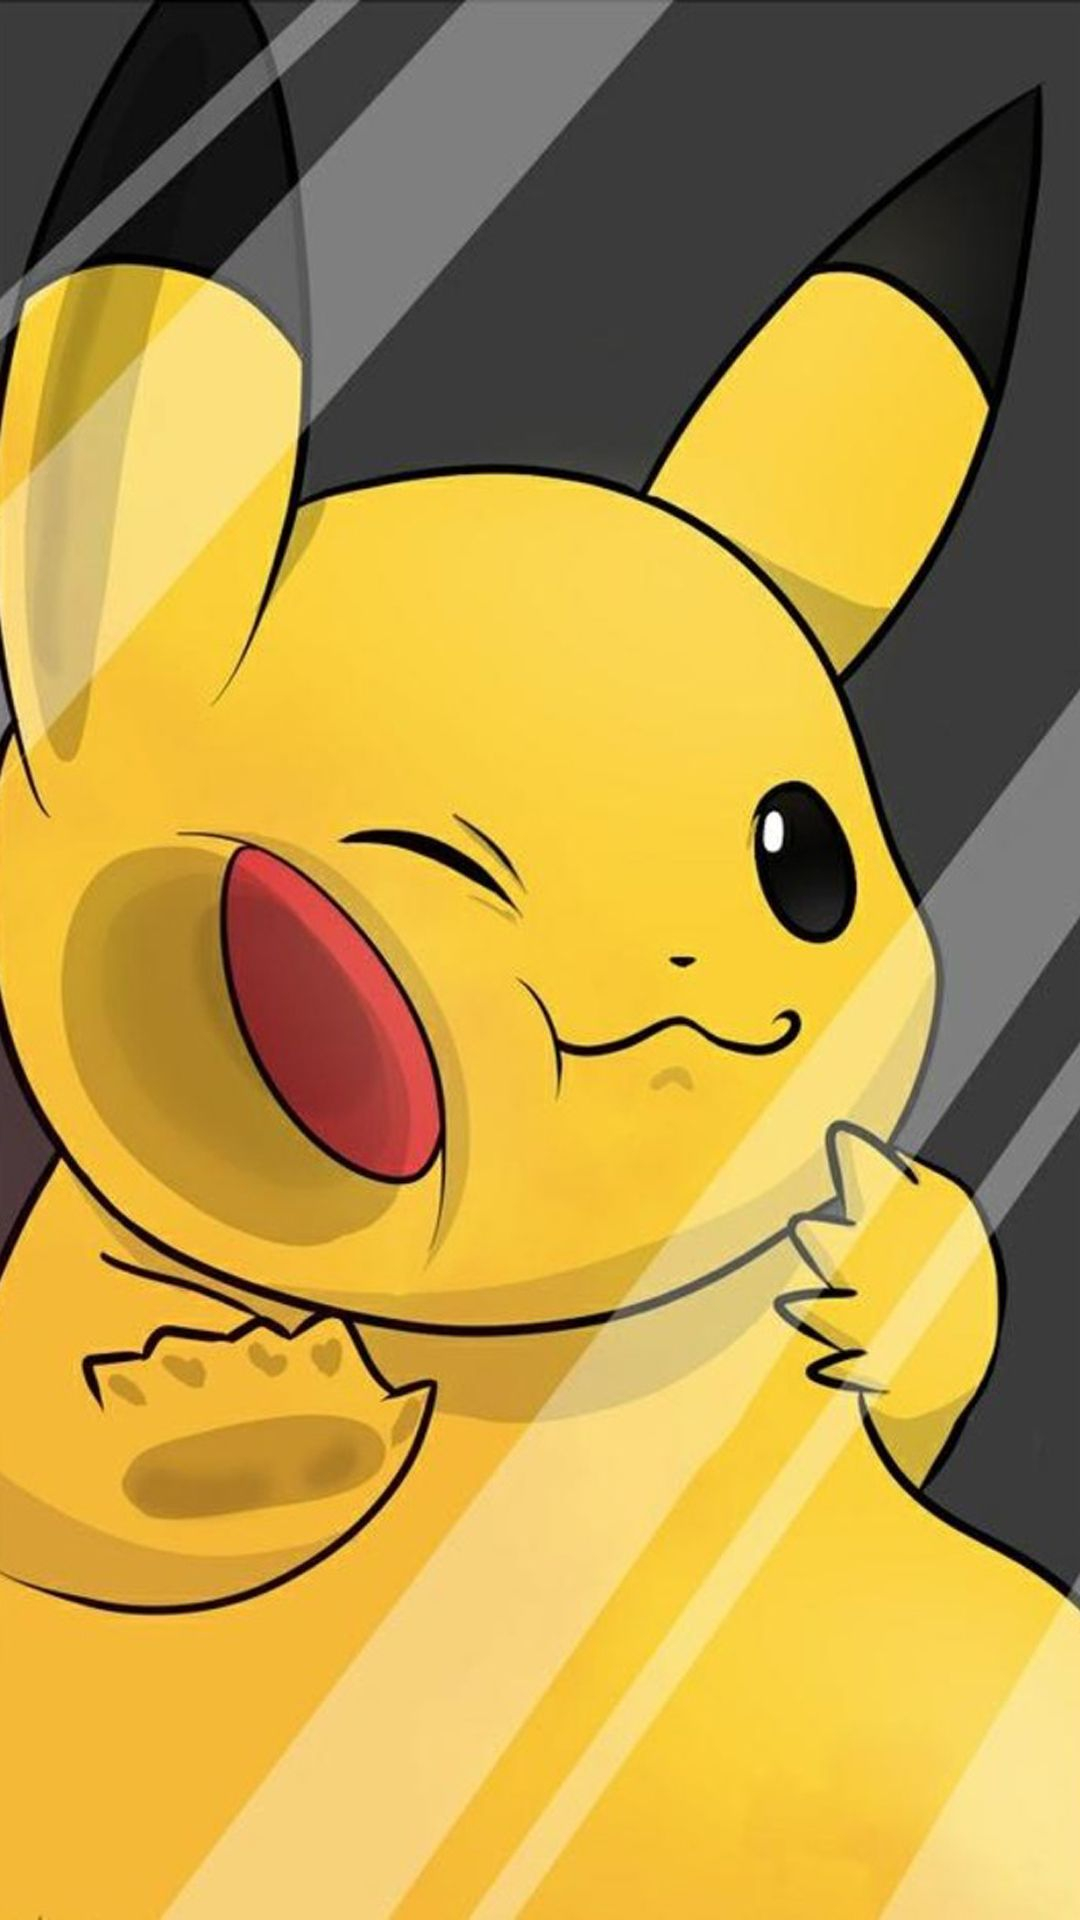 1080x1920 Cute Pikachu iPhone Wallpapers Top Free Cute Pikachu iPhone Backgrounds